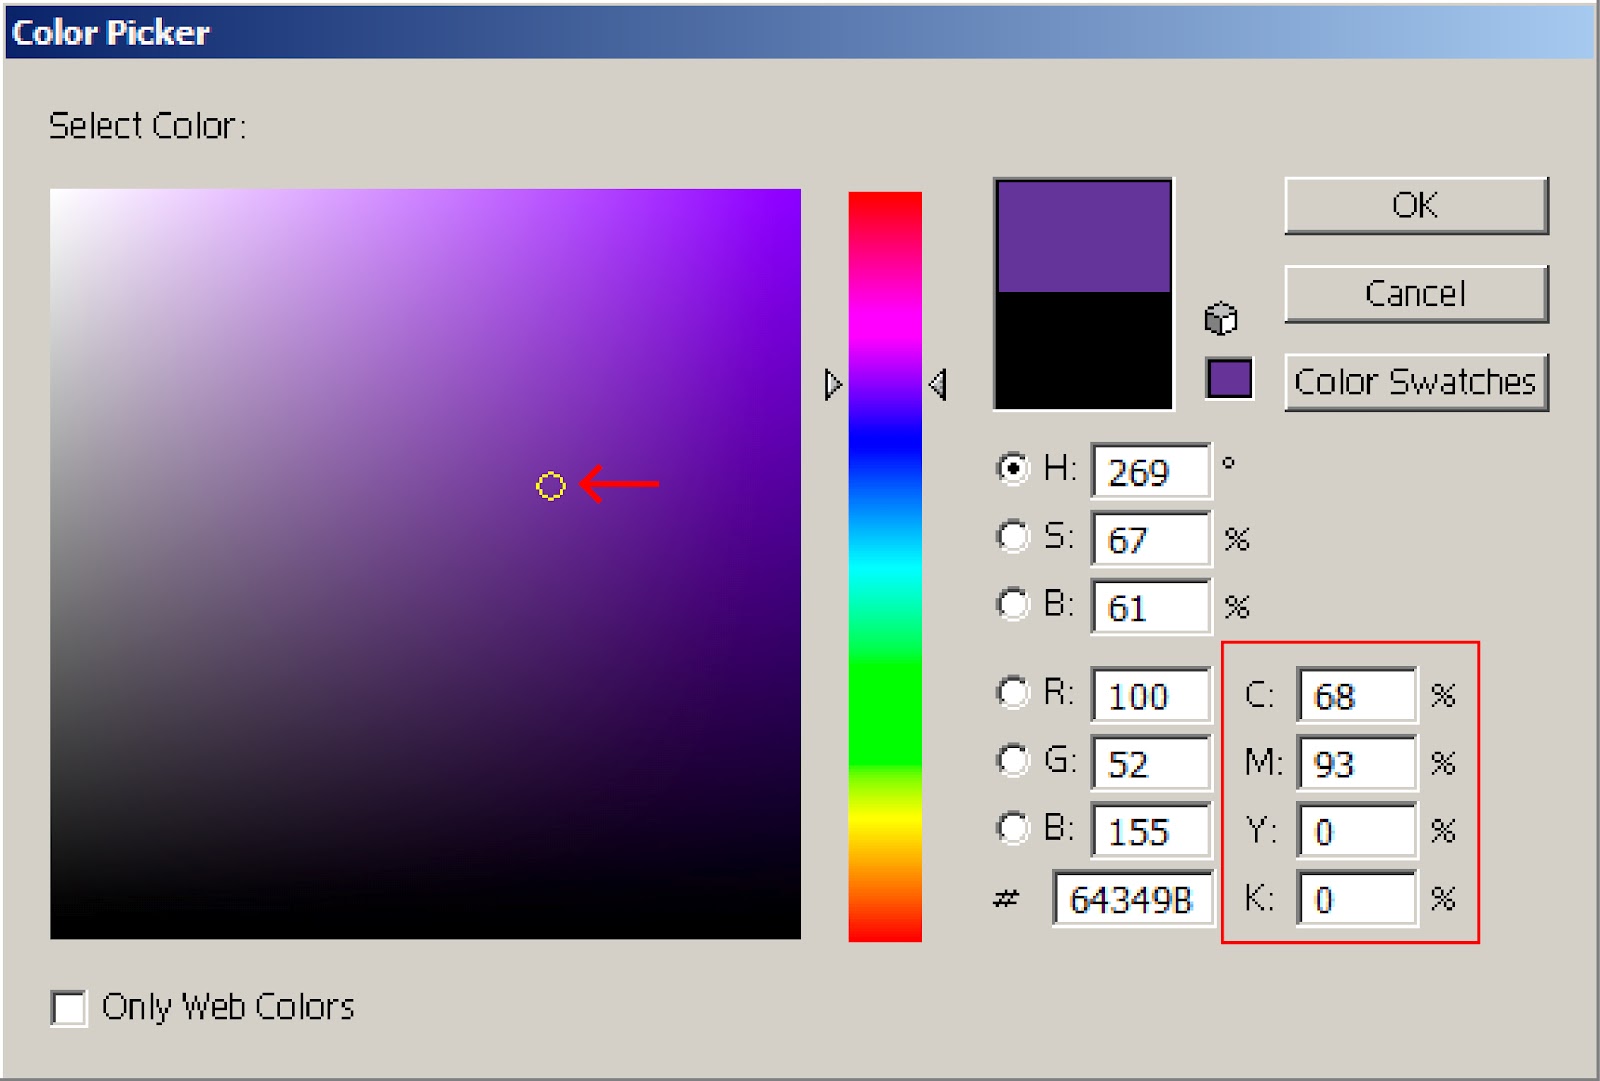 pantone color palette generator